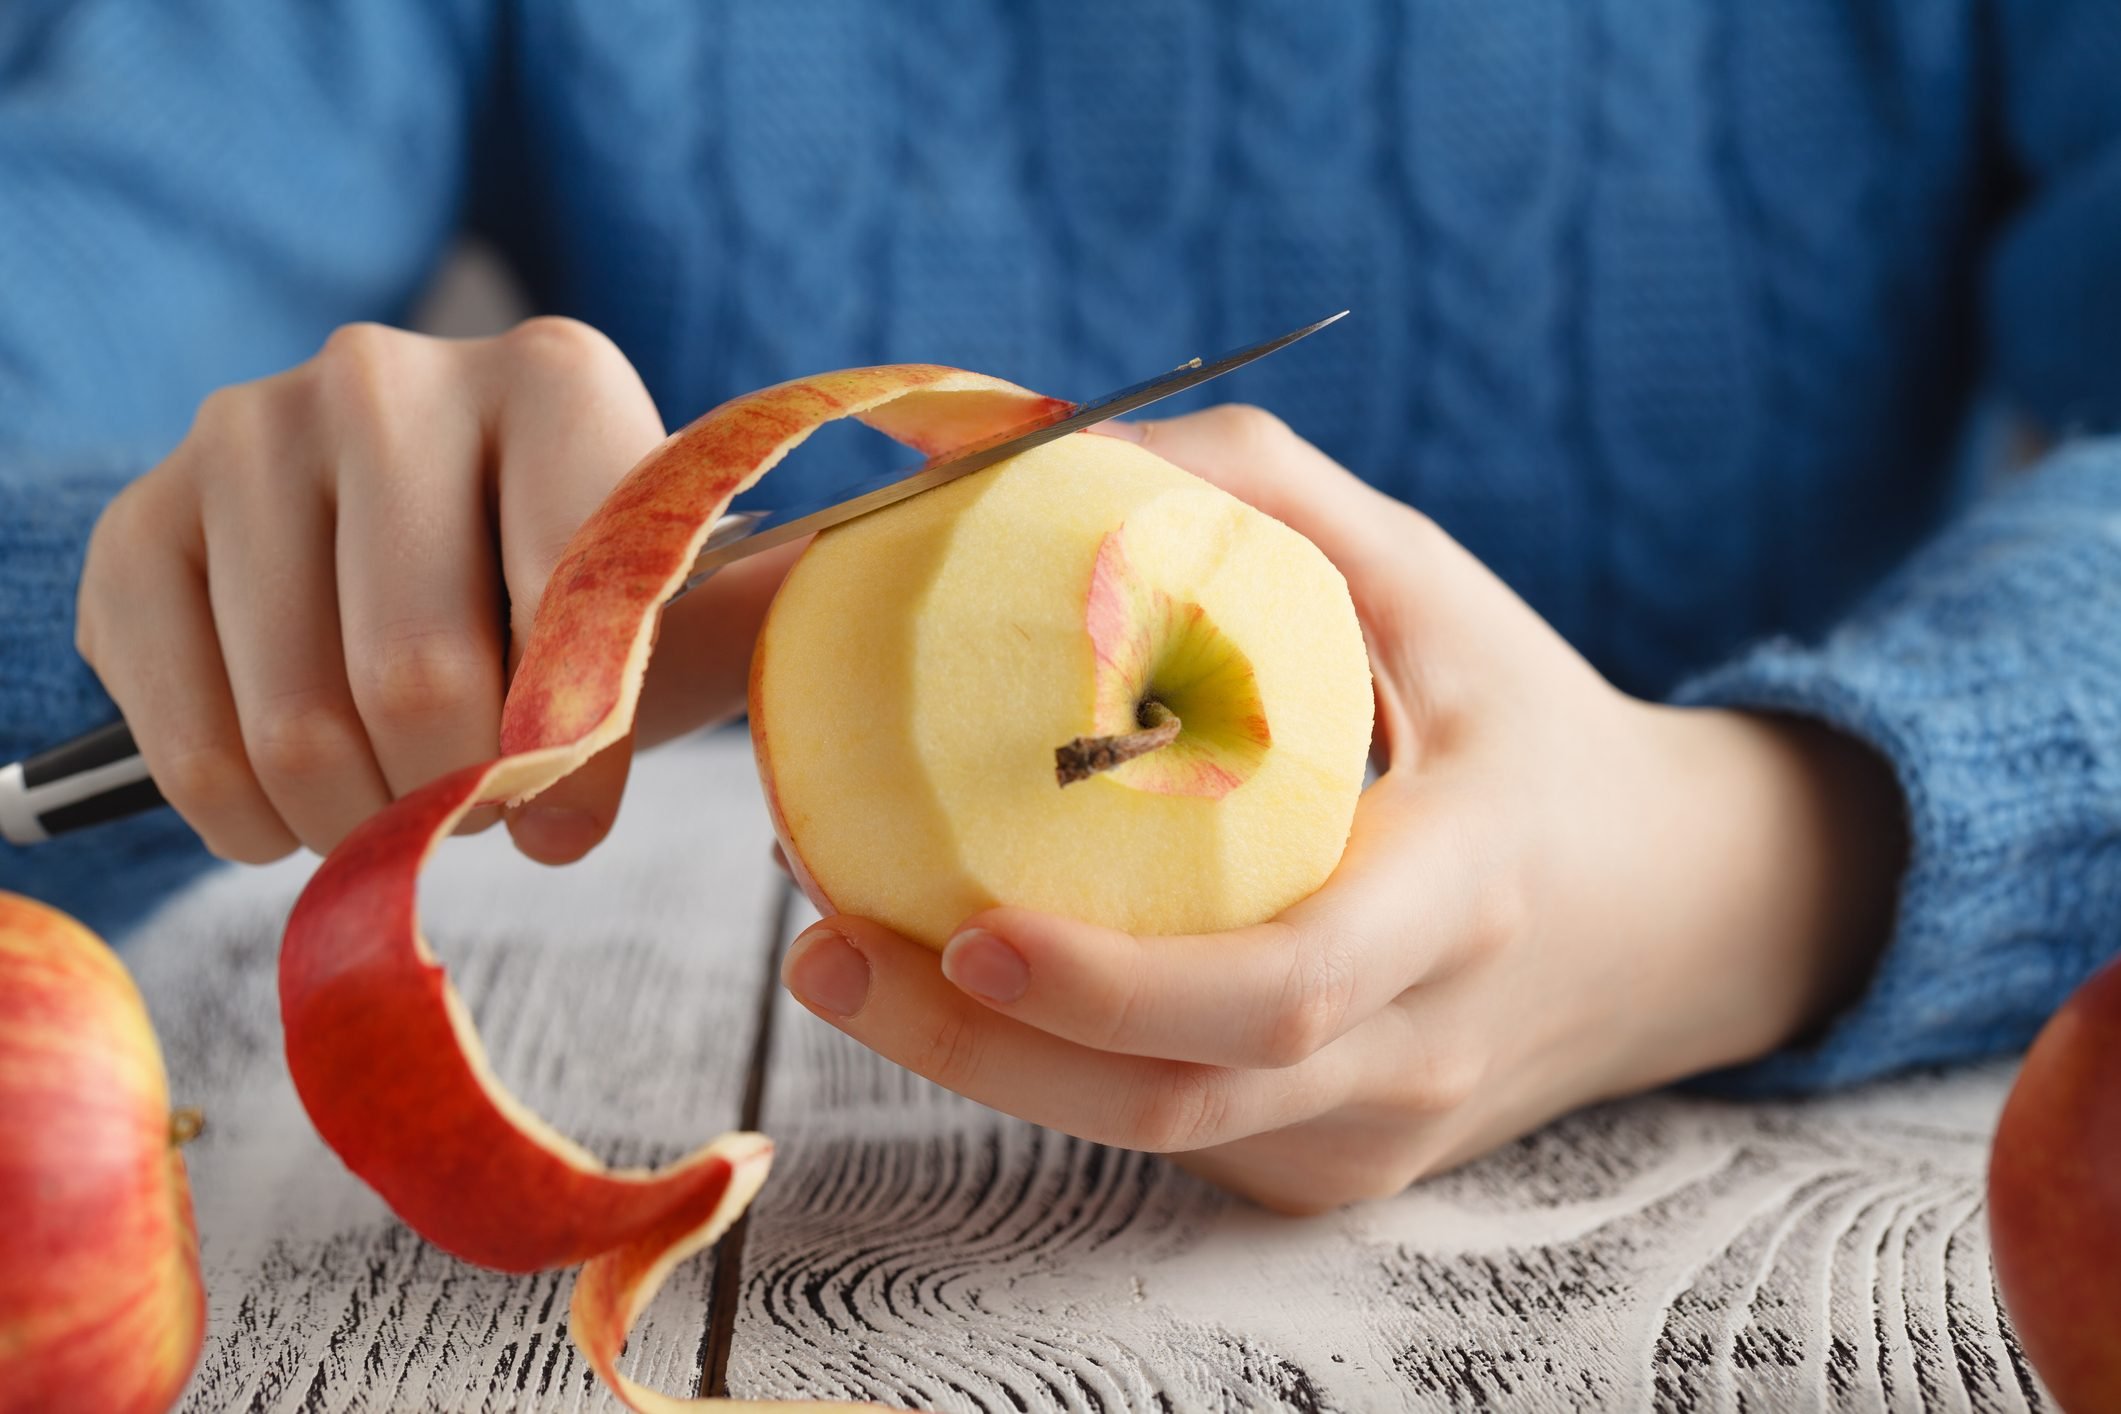 Girl peeling an apple on table